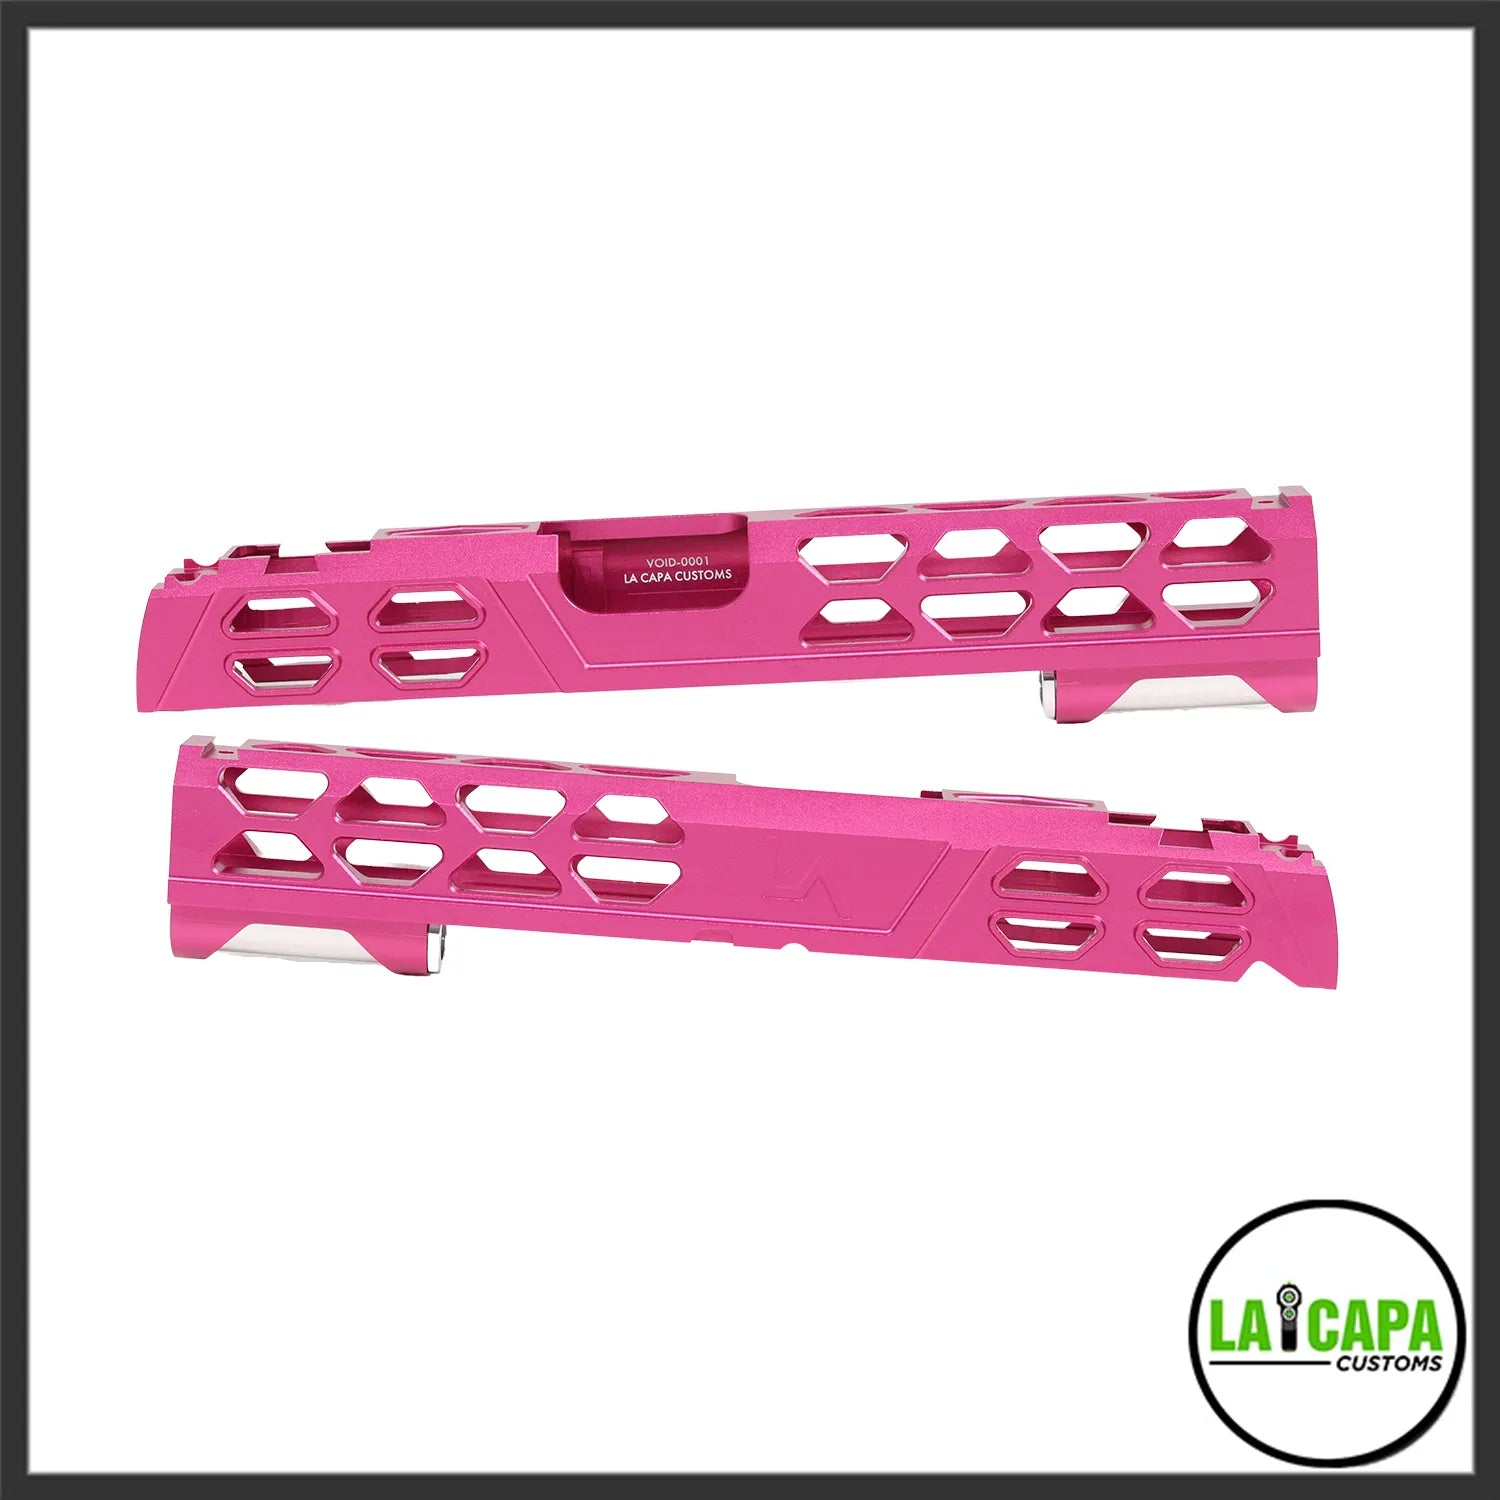 LA Capa Customs 5.1 “VOID” Aluminum Slide

- Pink